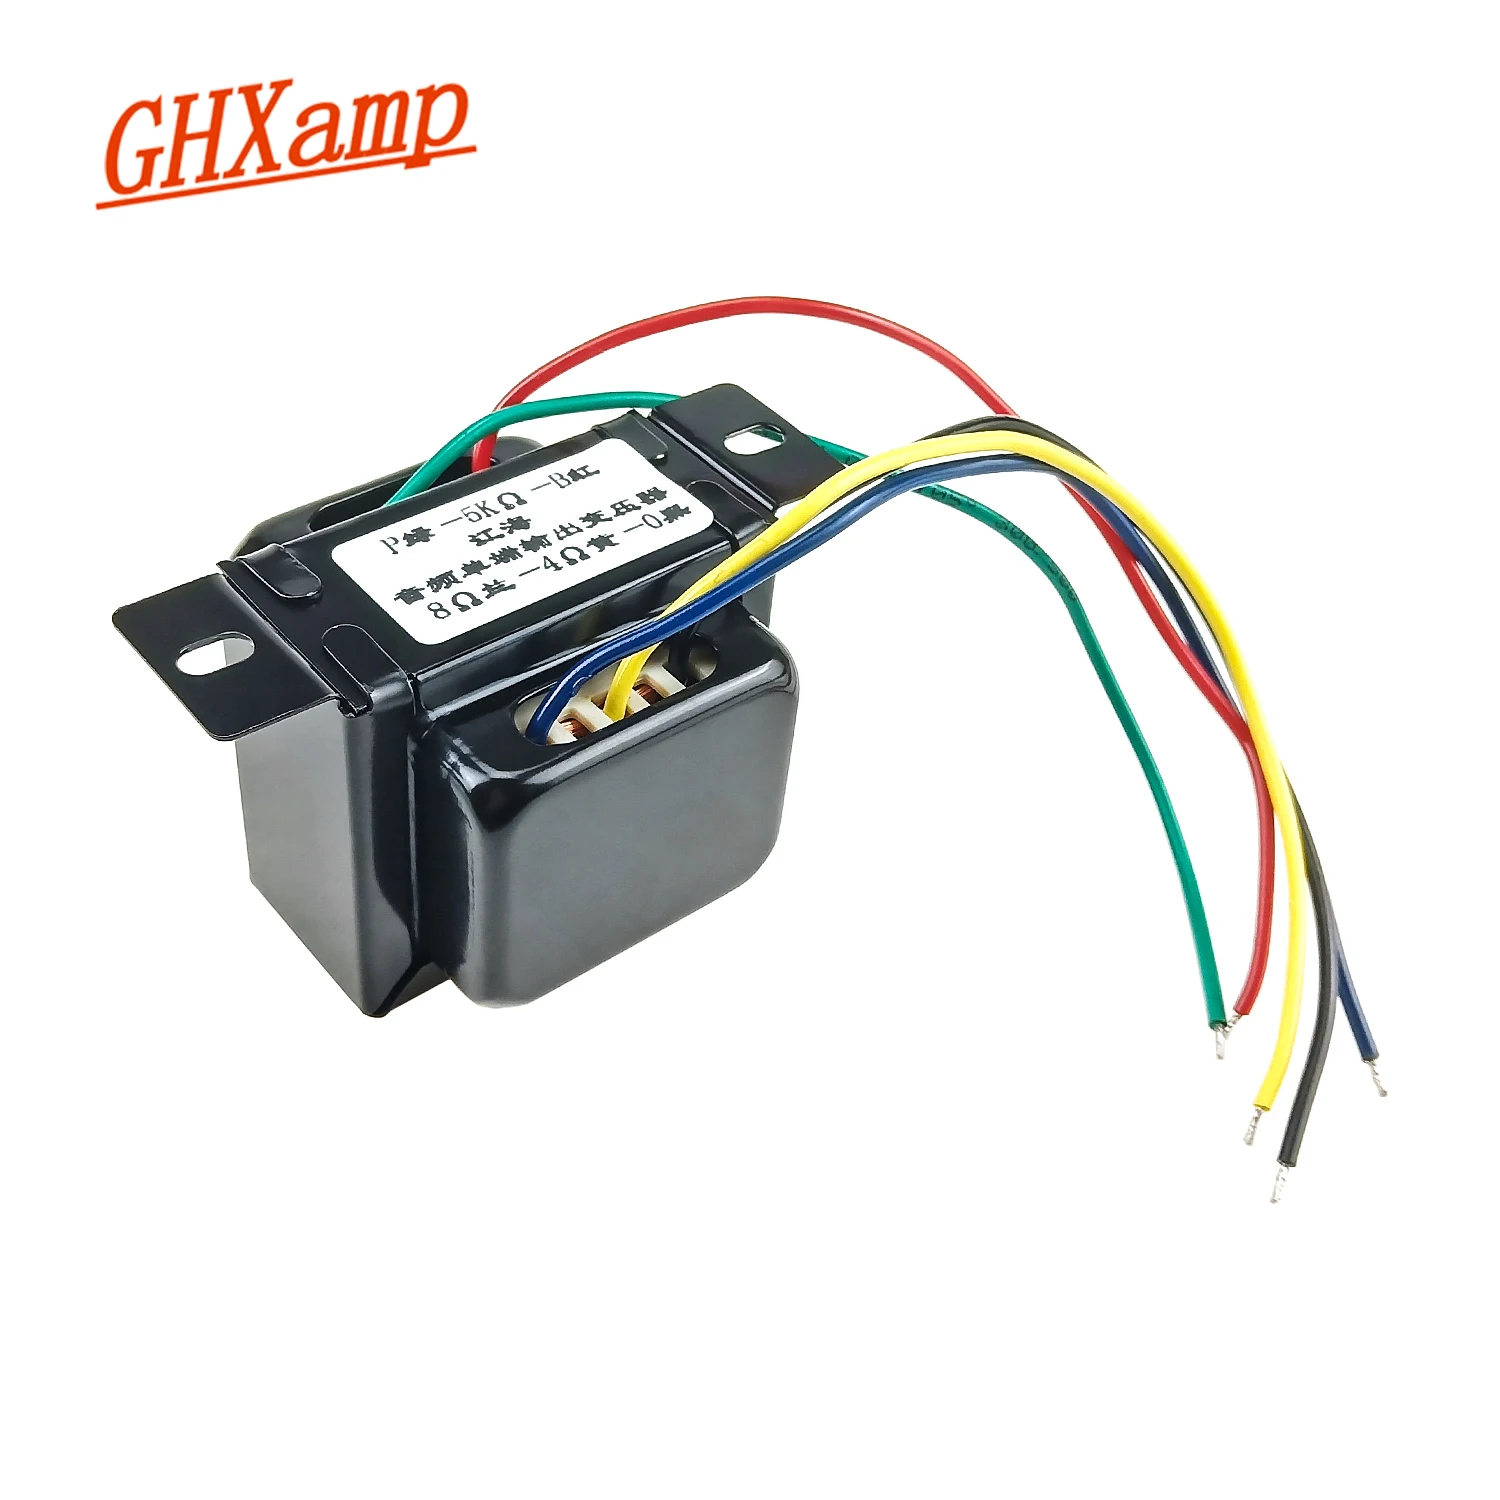 GHXAMP 5K Tube Amplifier Transformer EI57 Iron Core Single-ended Output Transformer For 6P1 6P14 6P6 Valve Amplifier 5W 1PC